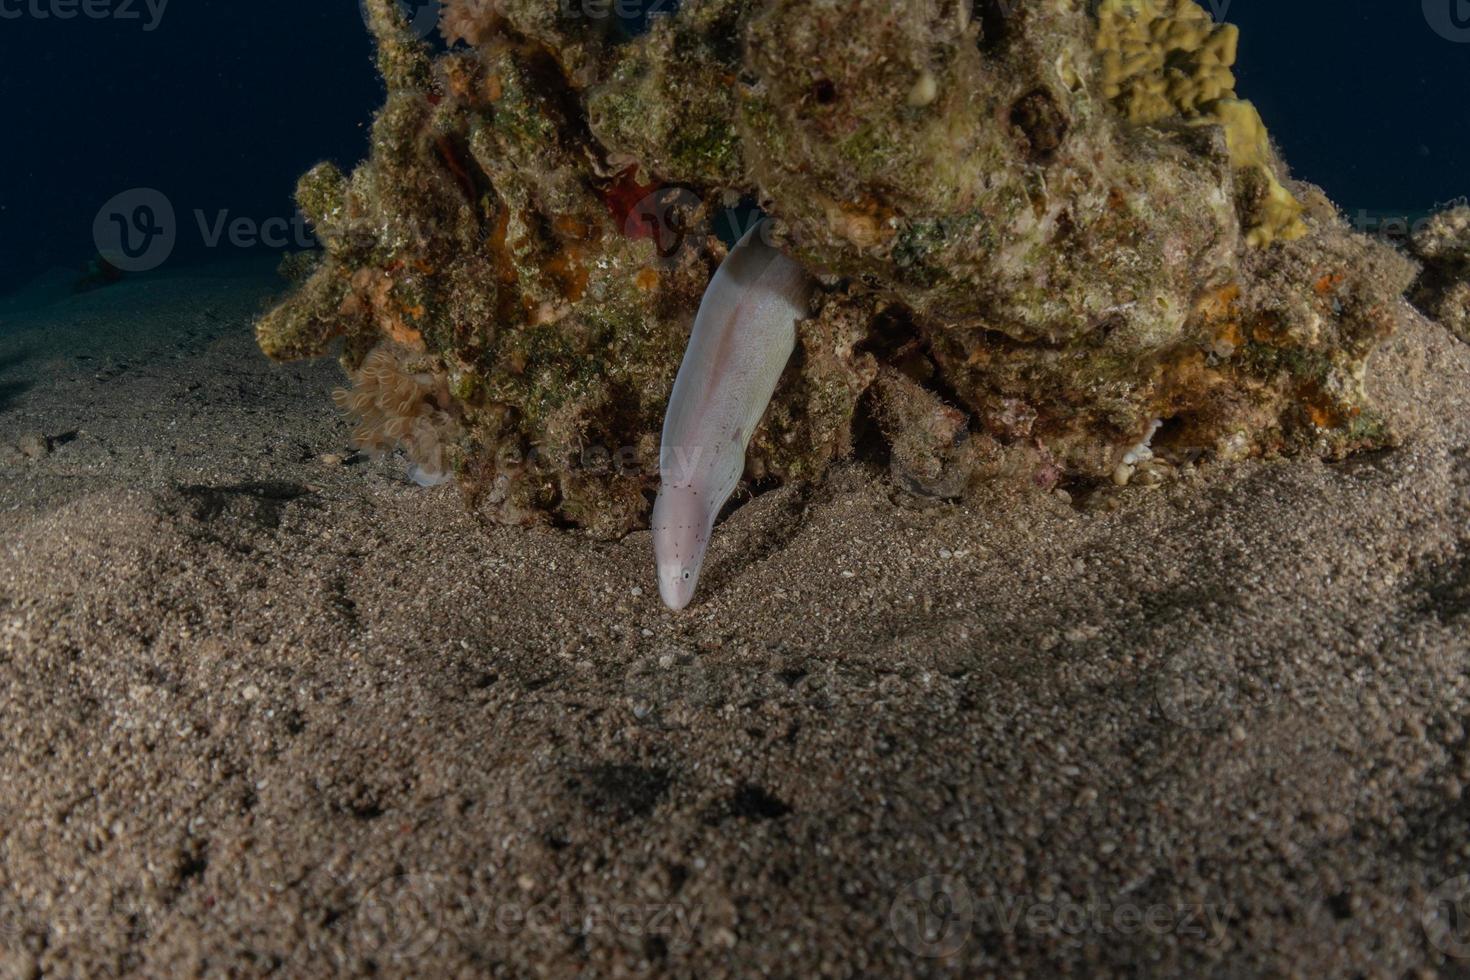 Moray eel Mooray lycodontis undulatus in the Red Sea, eilat israel photo